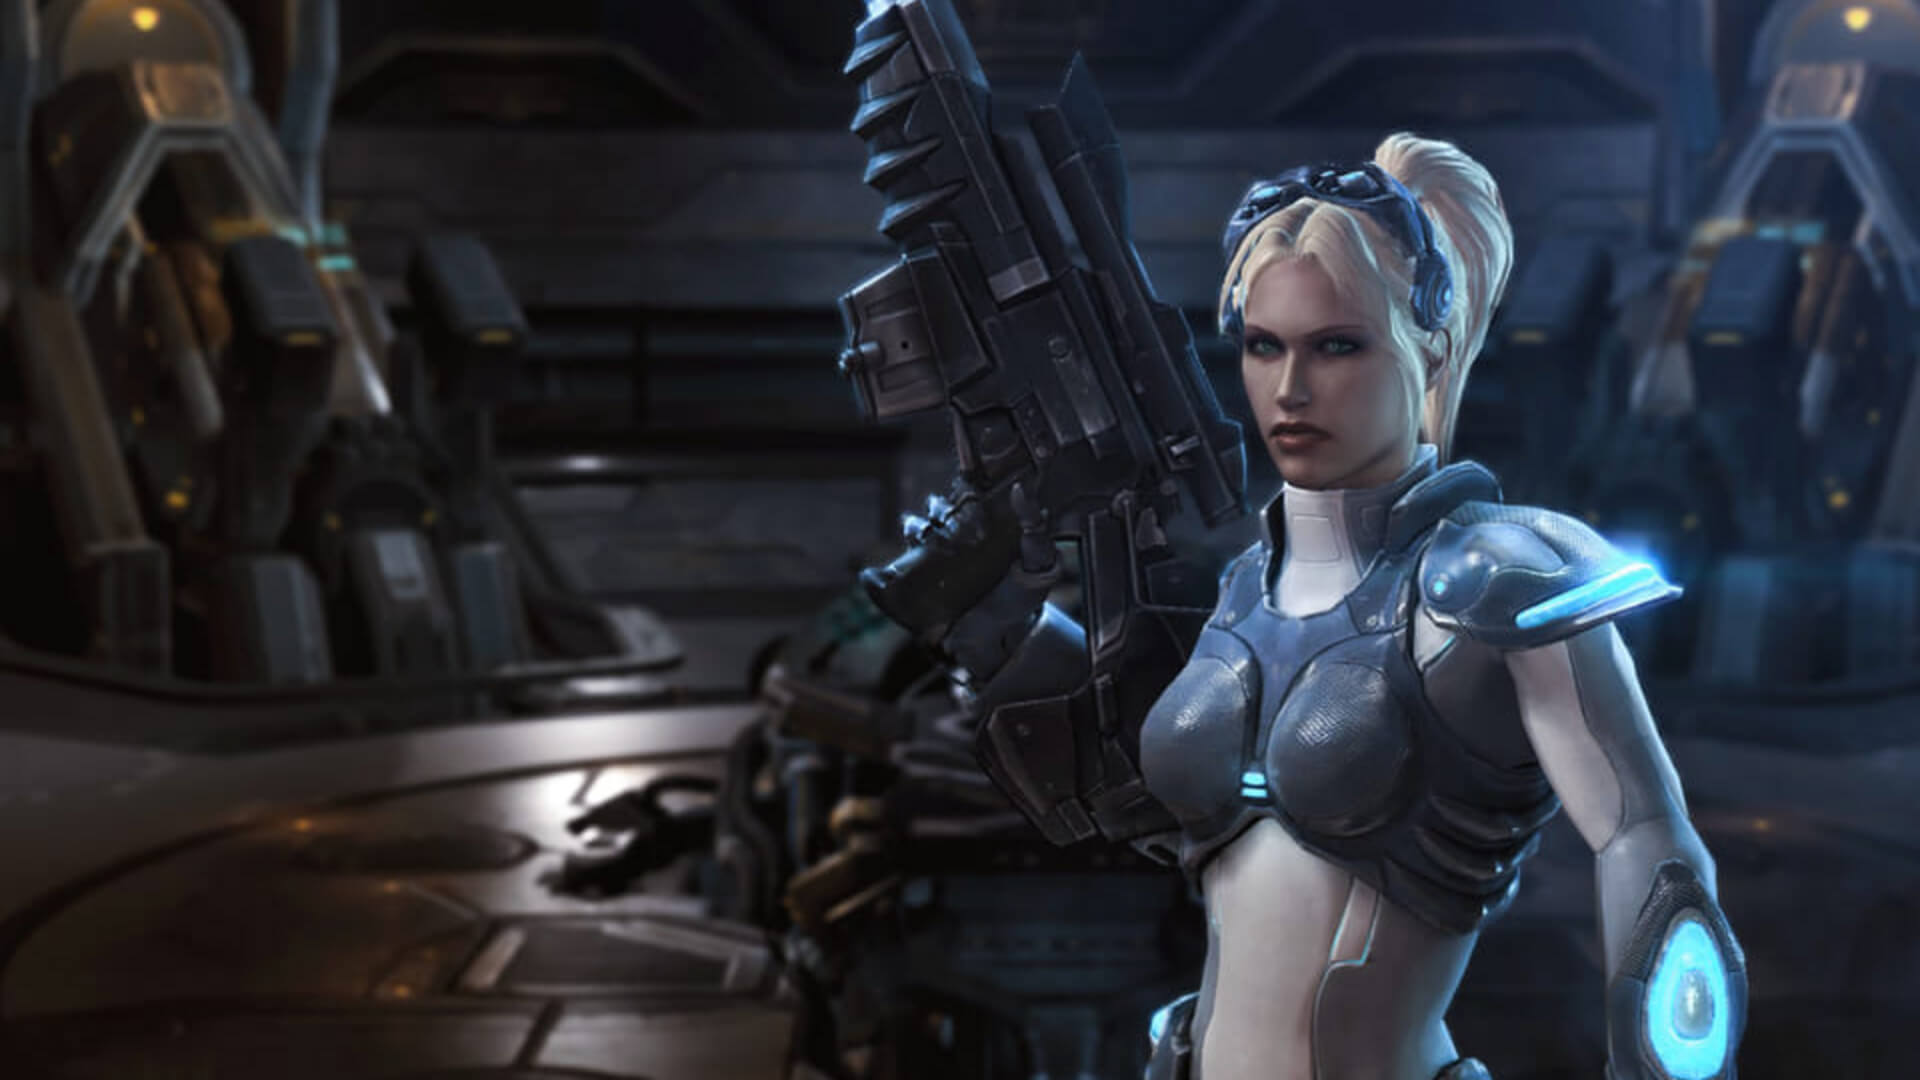 Download StarCraft II: Nova Covert Ops for PC